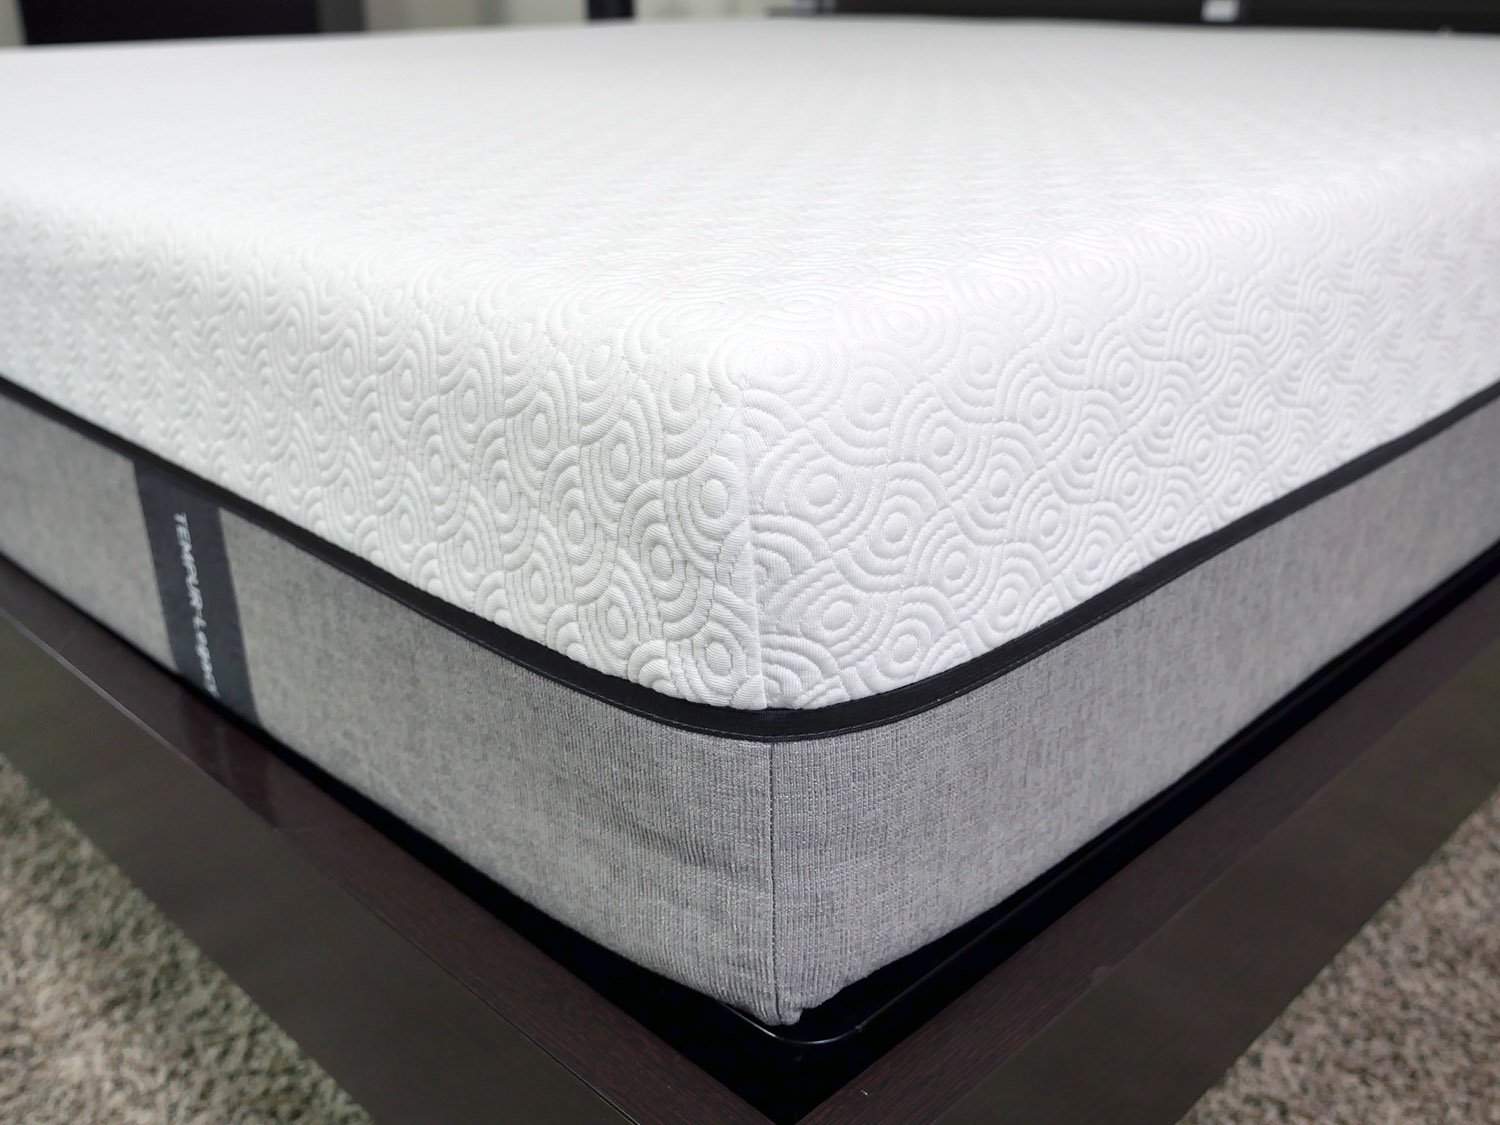 tempurpedic temperature control mattress cover